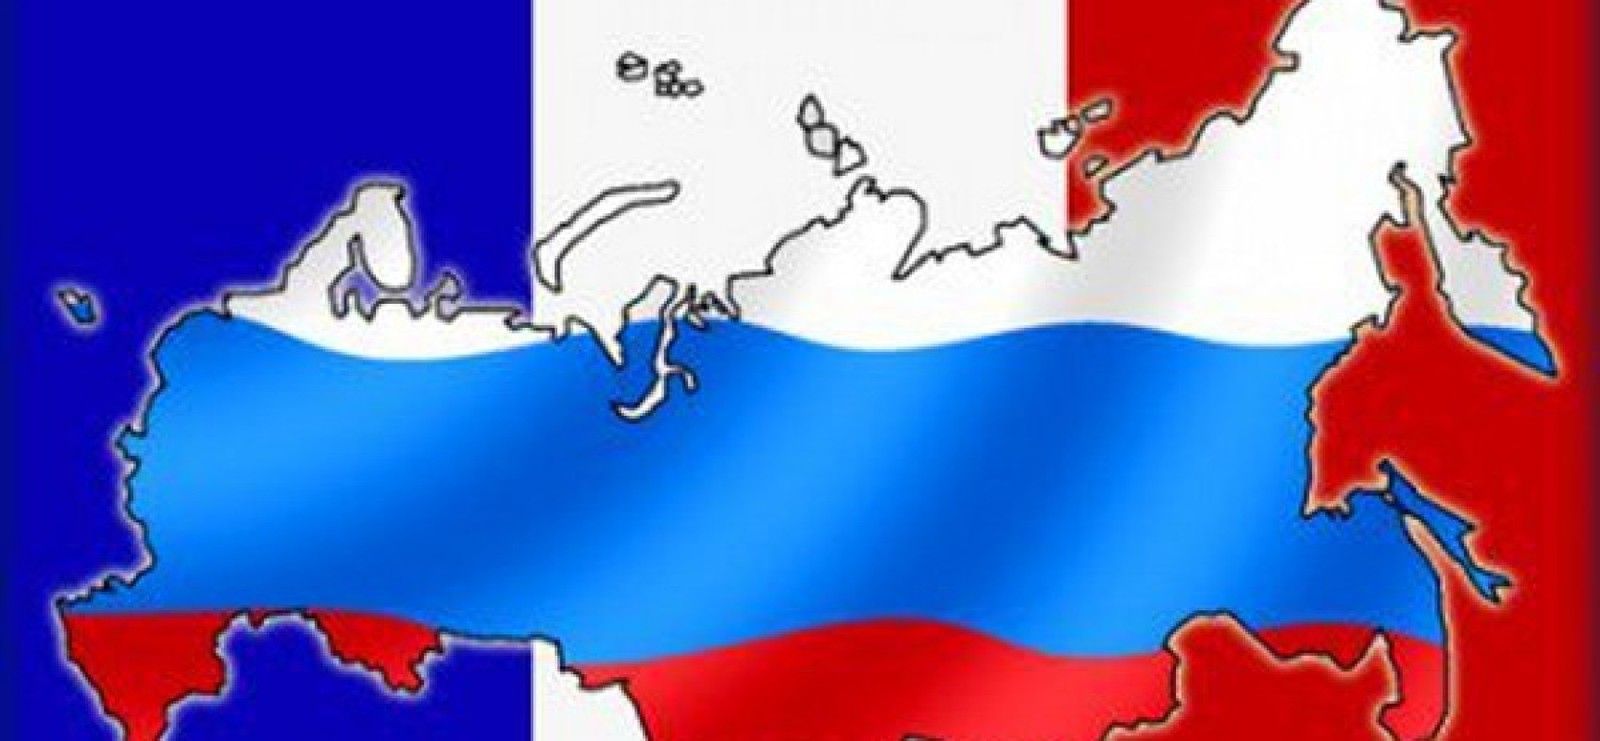 France Russie 400x233 1728x800 c